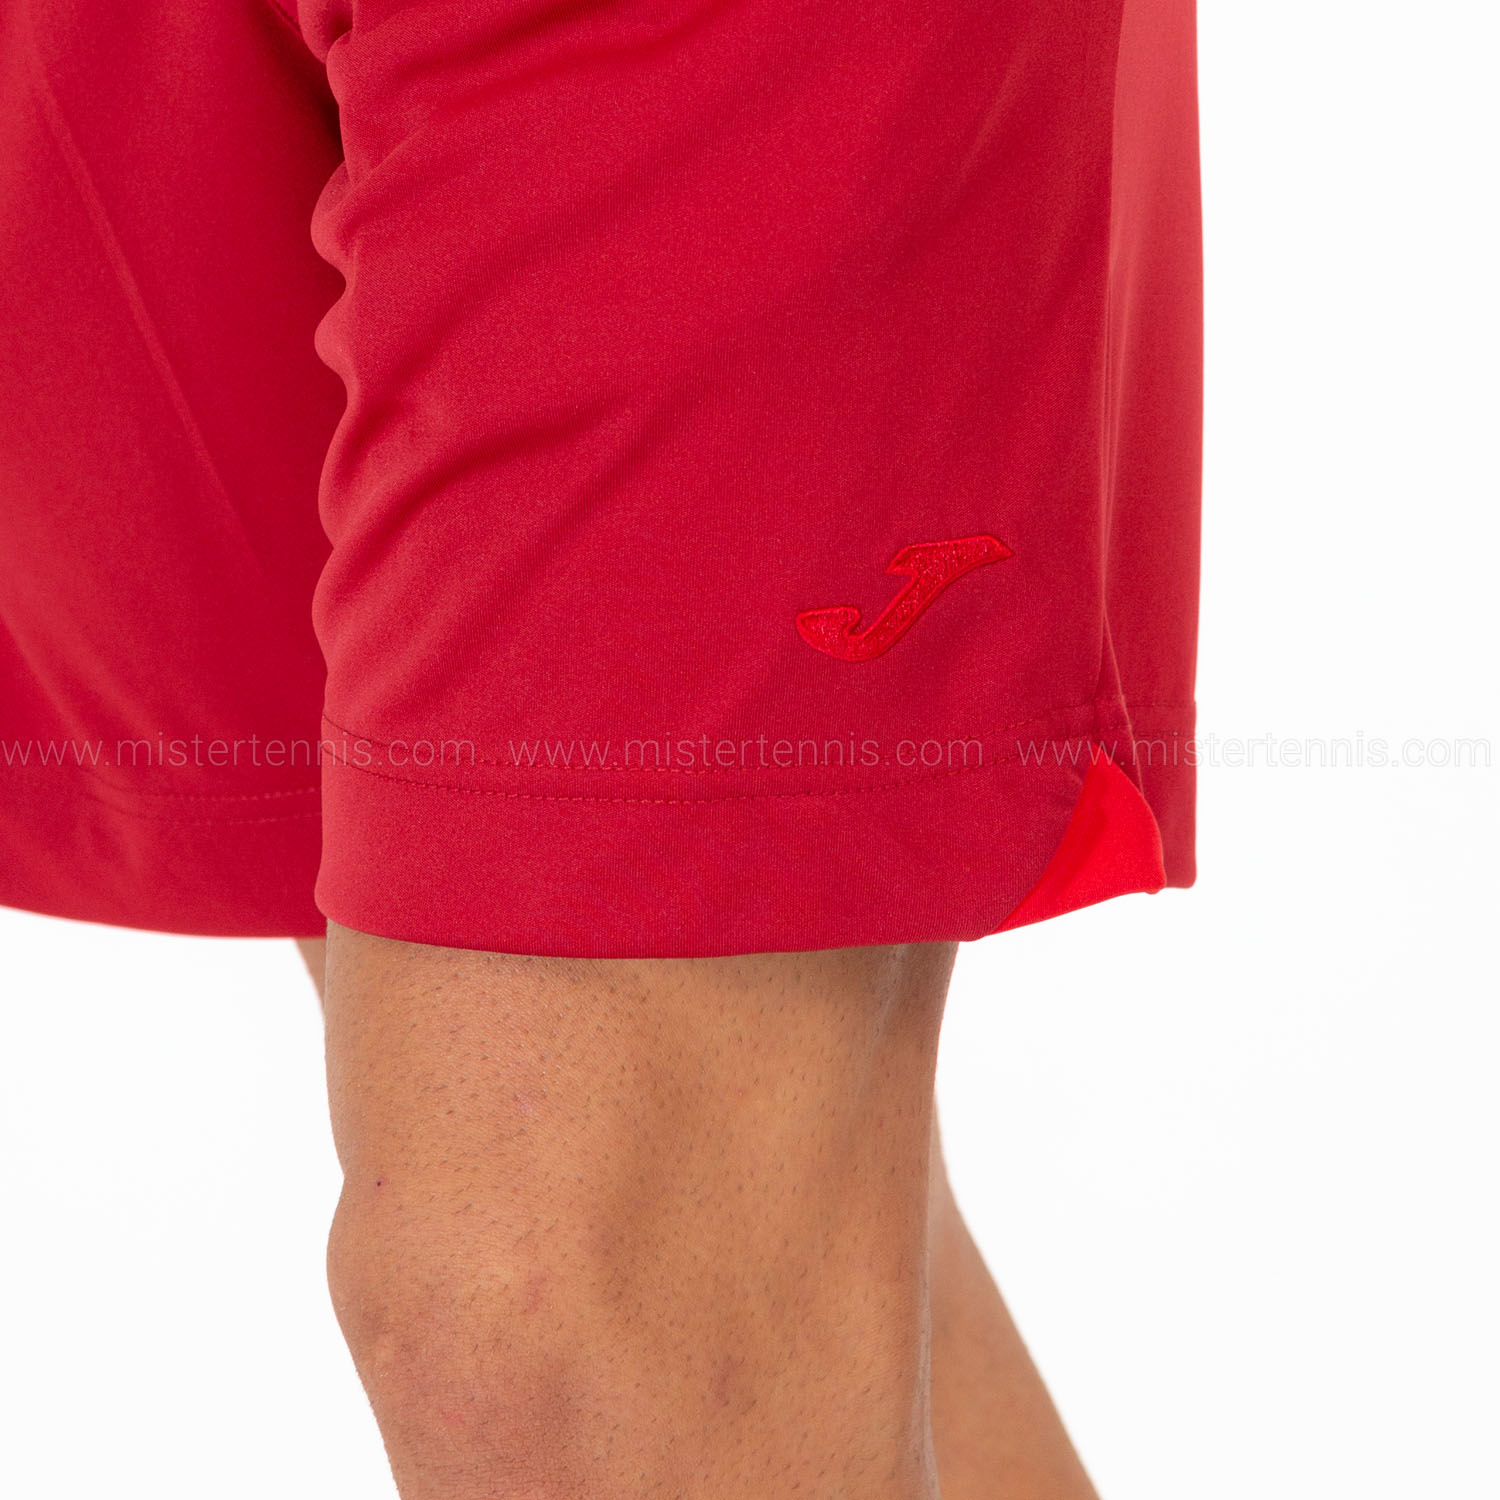 Joma Miami 7in Shorts - Red